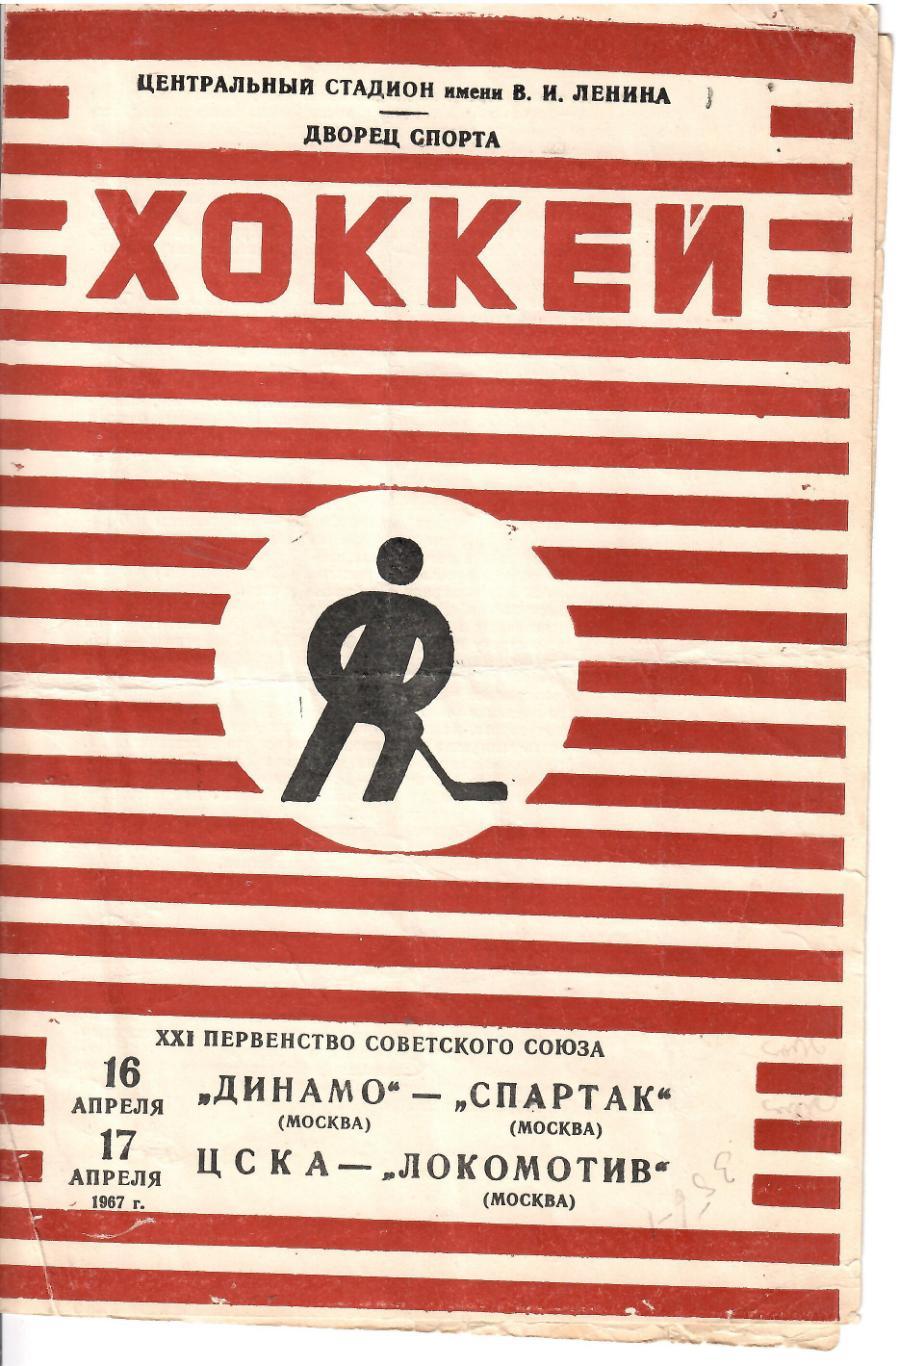 1967 Хоккей Динамо (Москва) - Спартак (Москва) - ЦСКА - Локомотив (Москва)